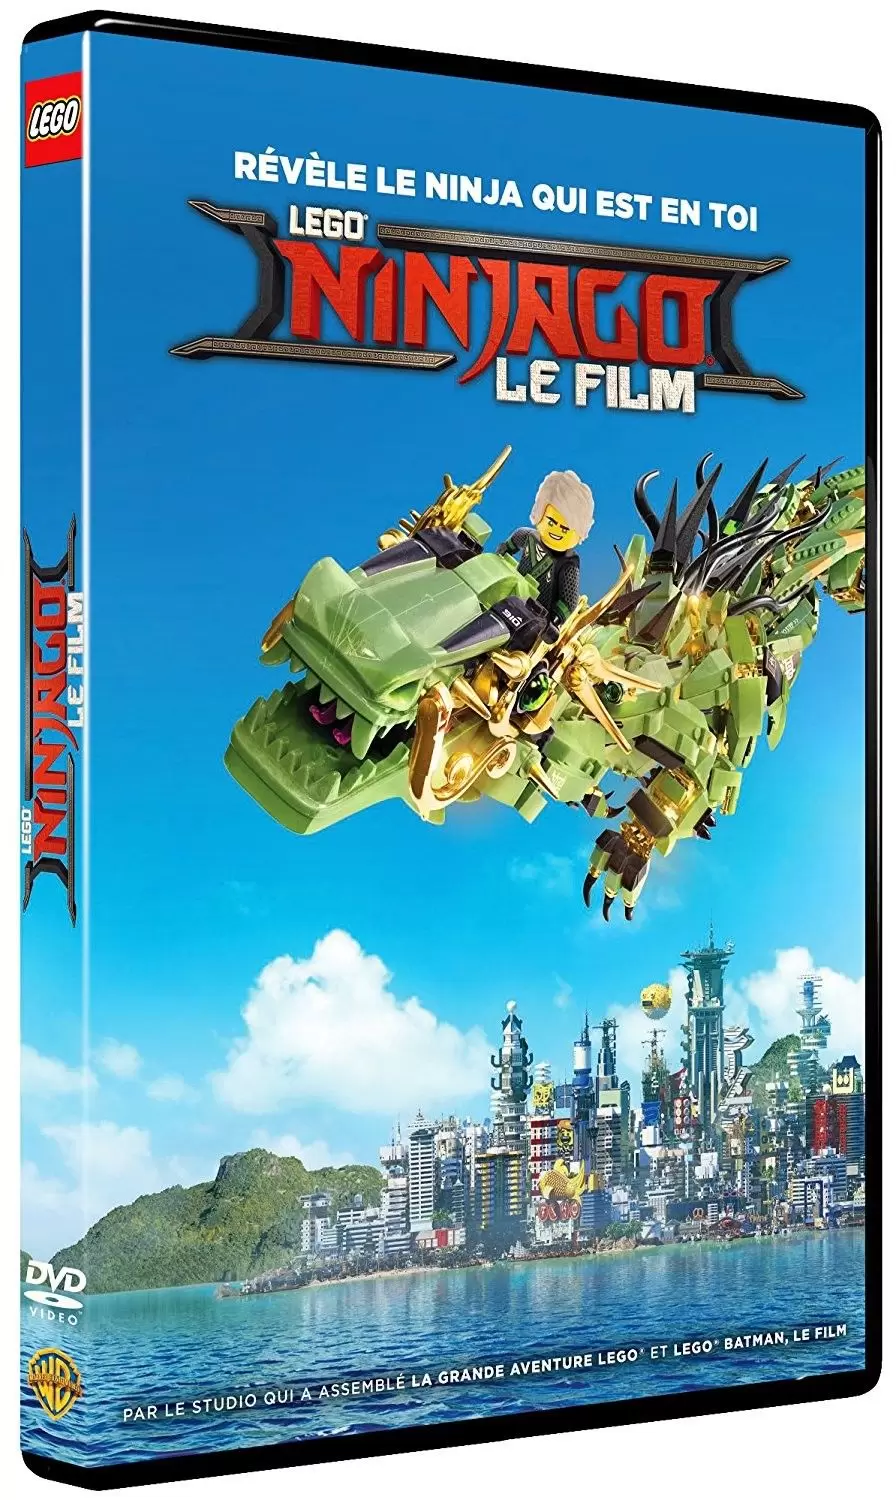 LEGO DVD - Lego Ninjago, le film